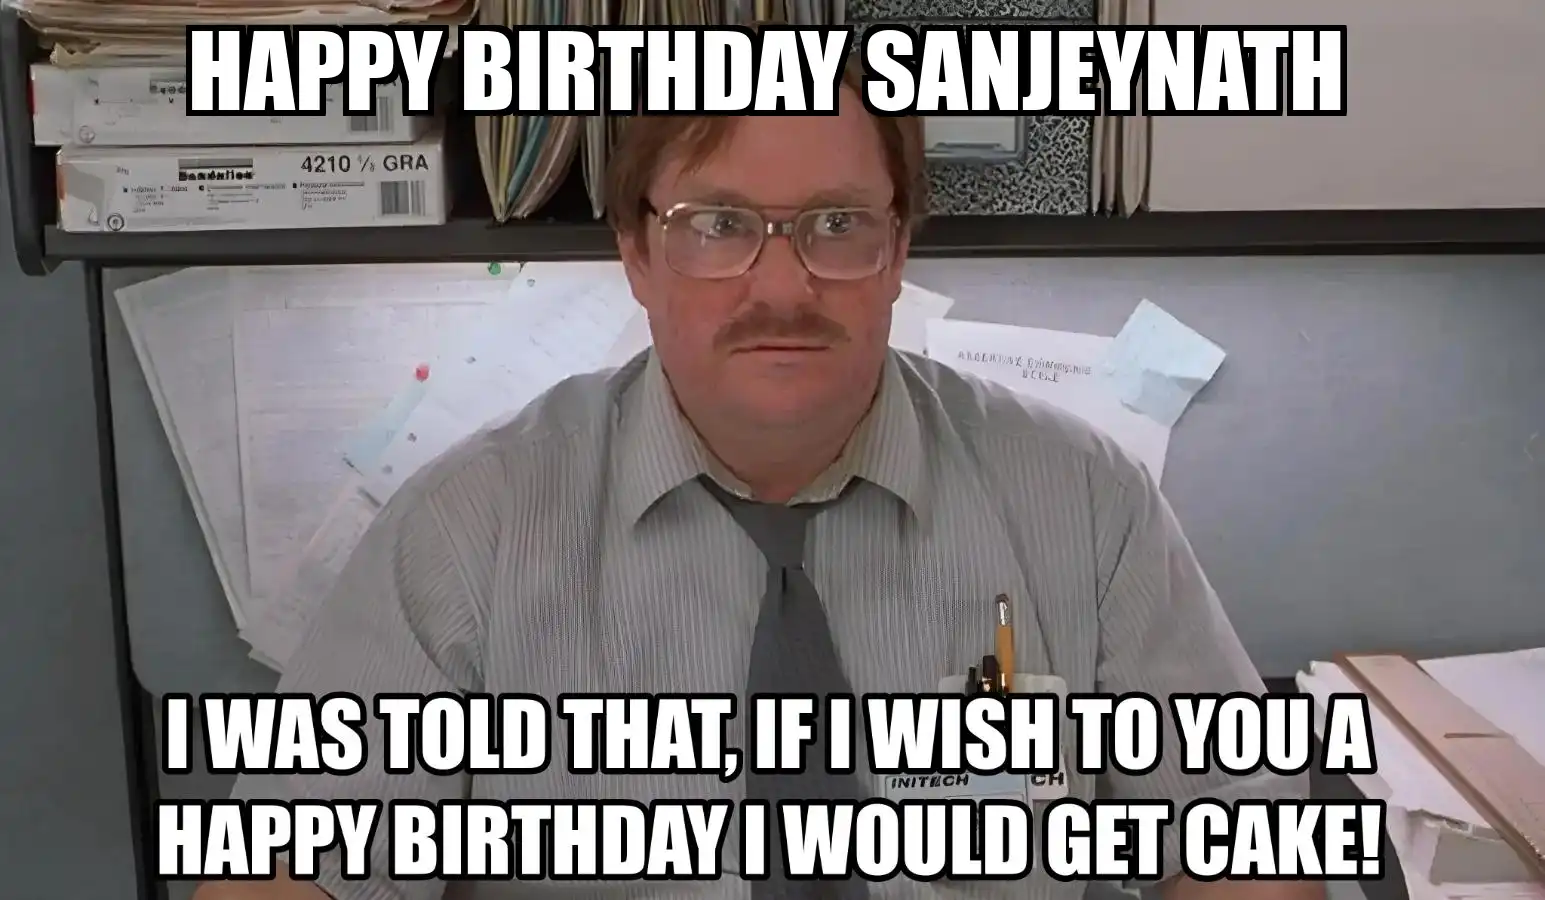 Happy Birthday Sanjeynath I Would Get A Cake Meme